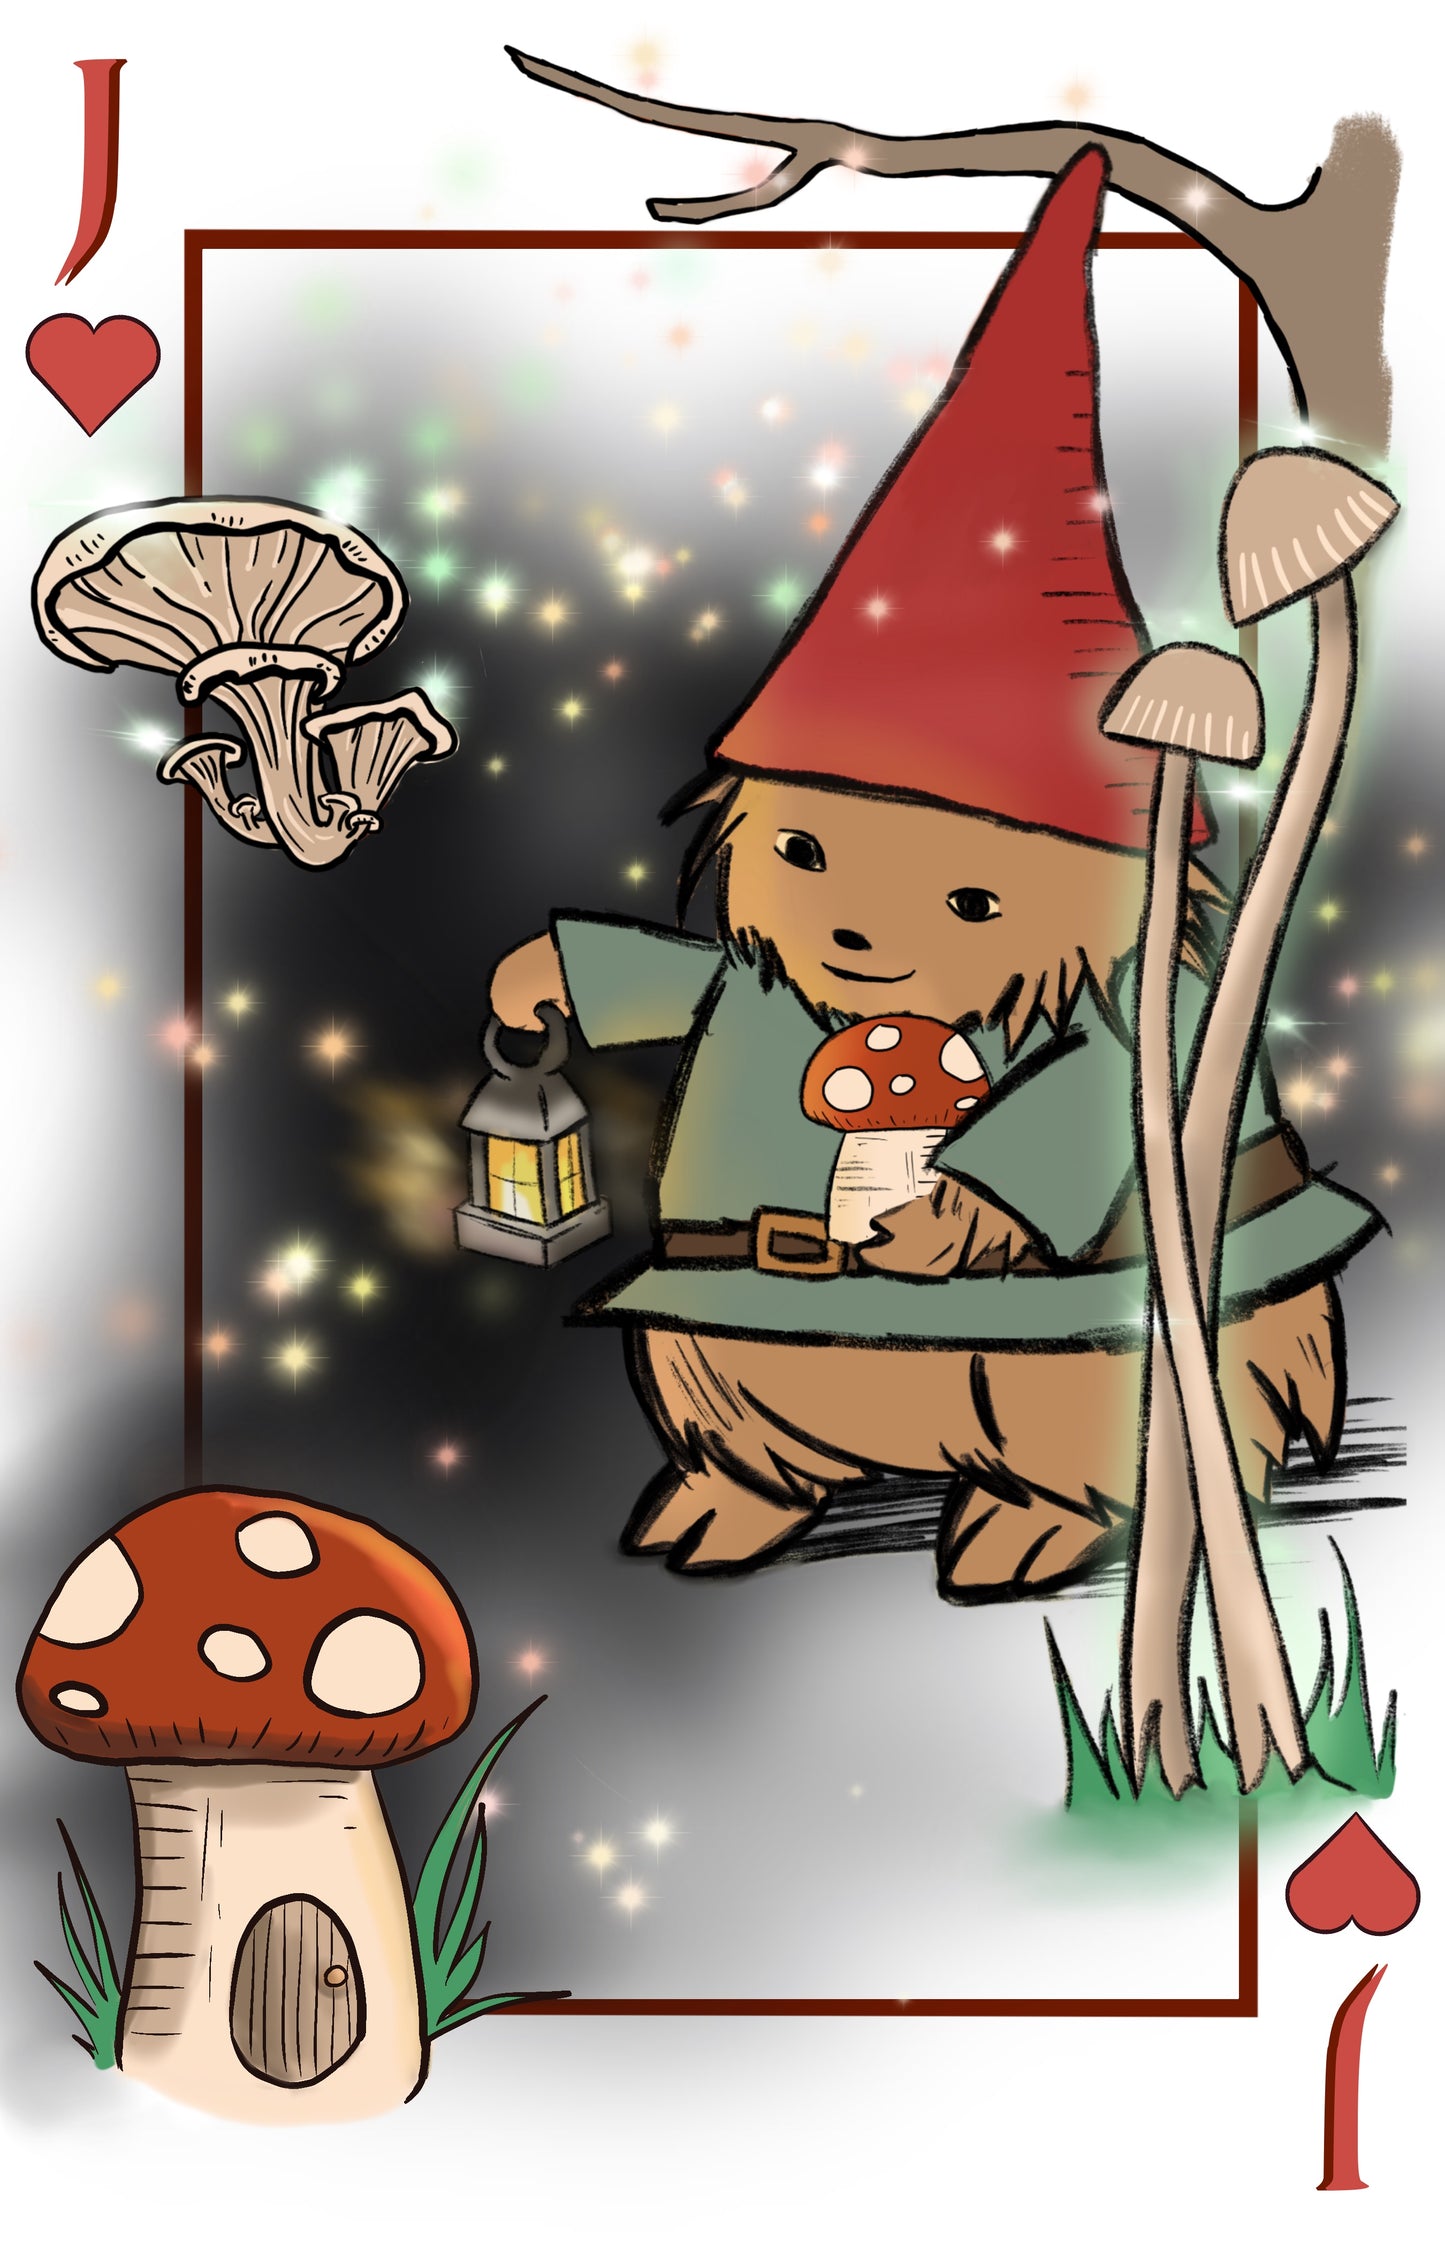 Mushroom hunting fantasy themed playing cards